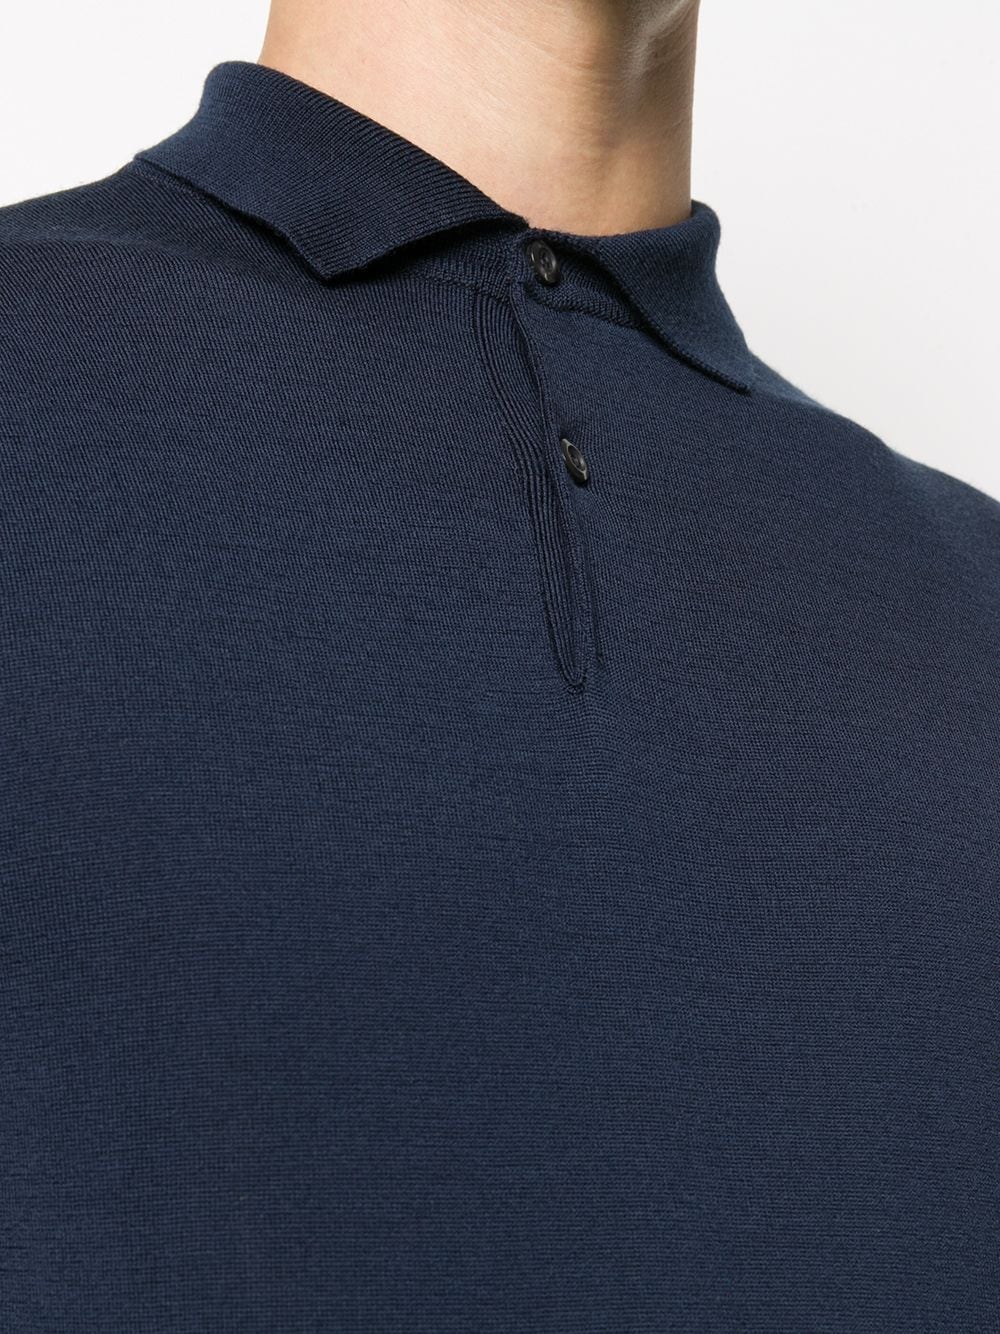 John Smedley Fine Knitted Polo Shirt - Farfetch